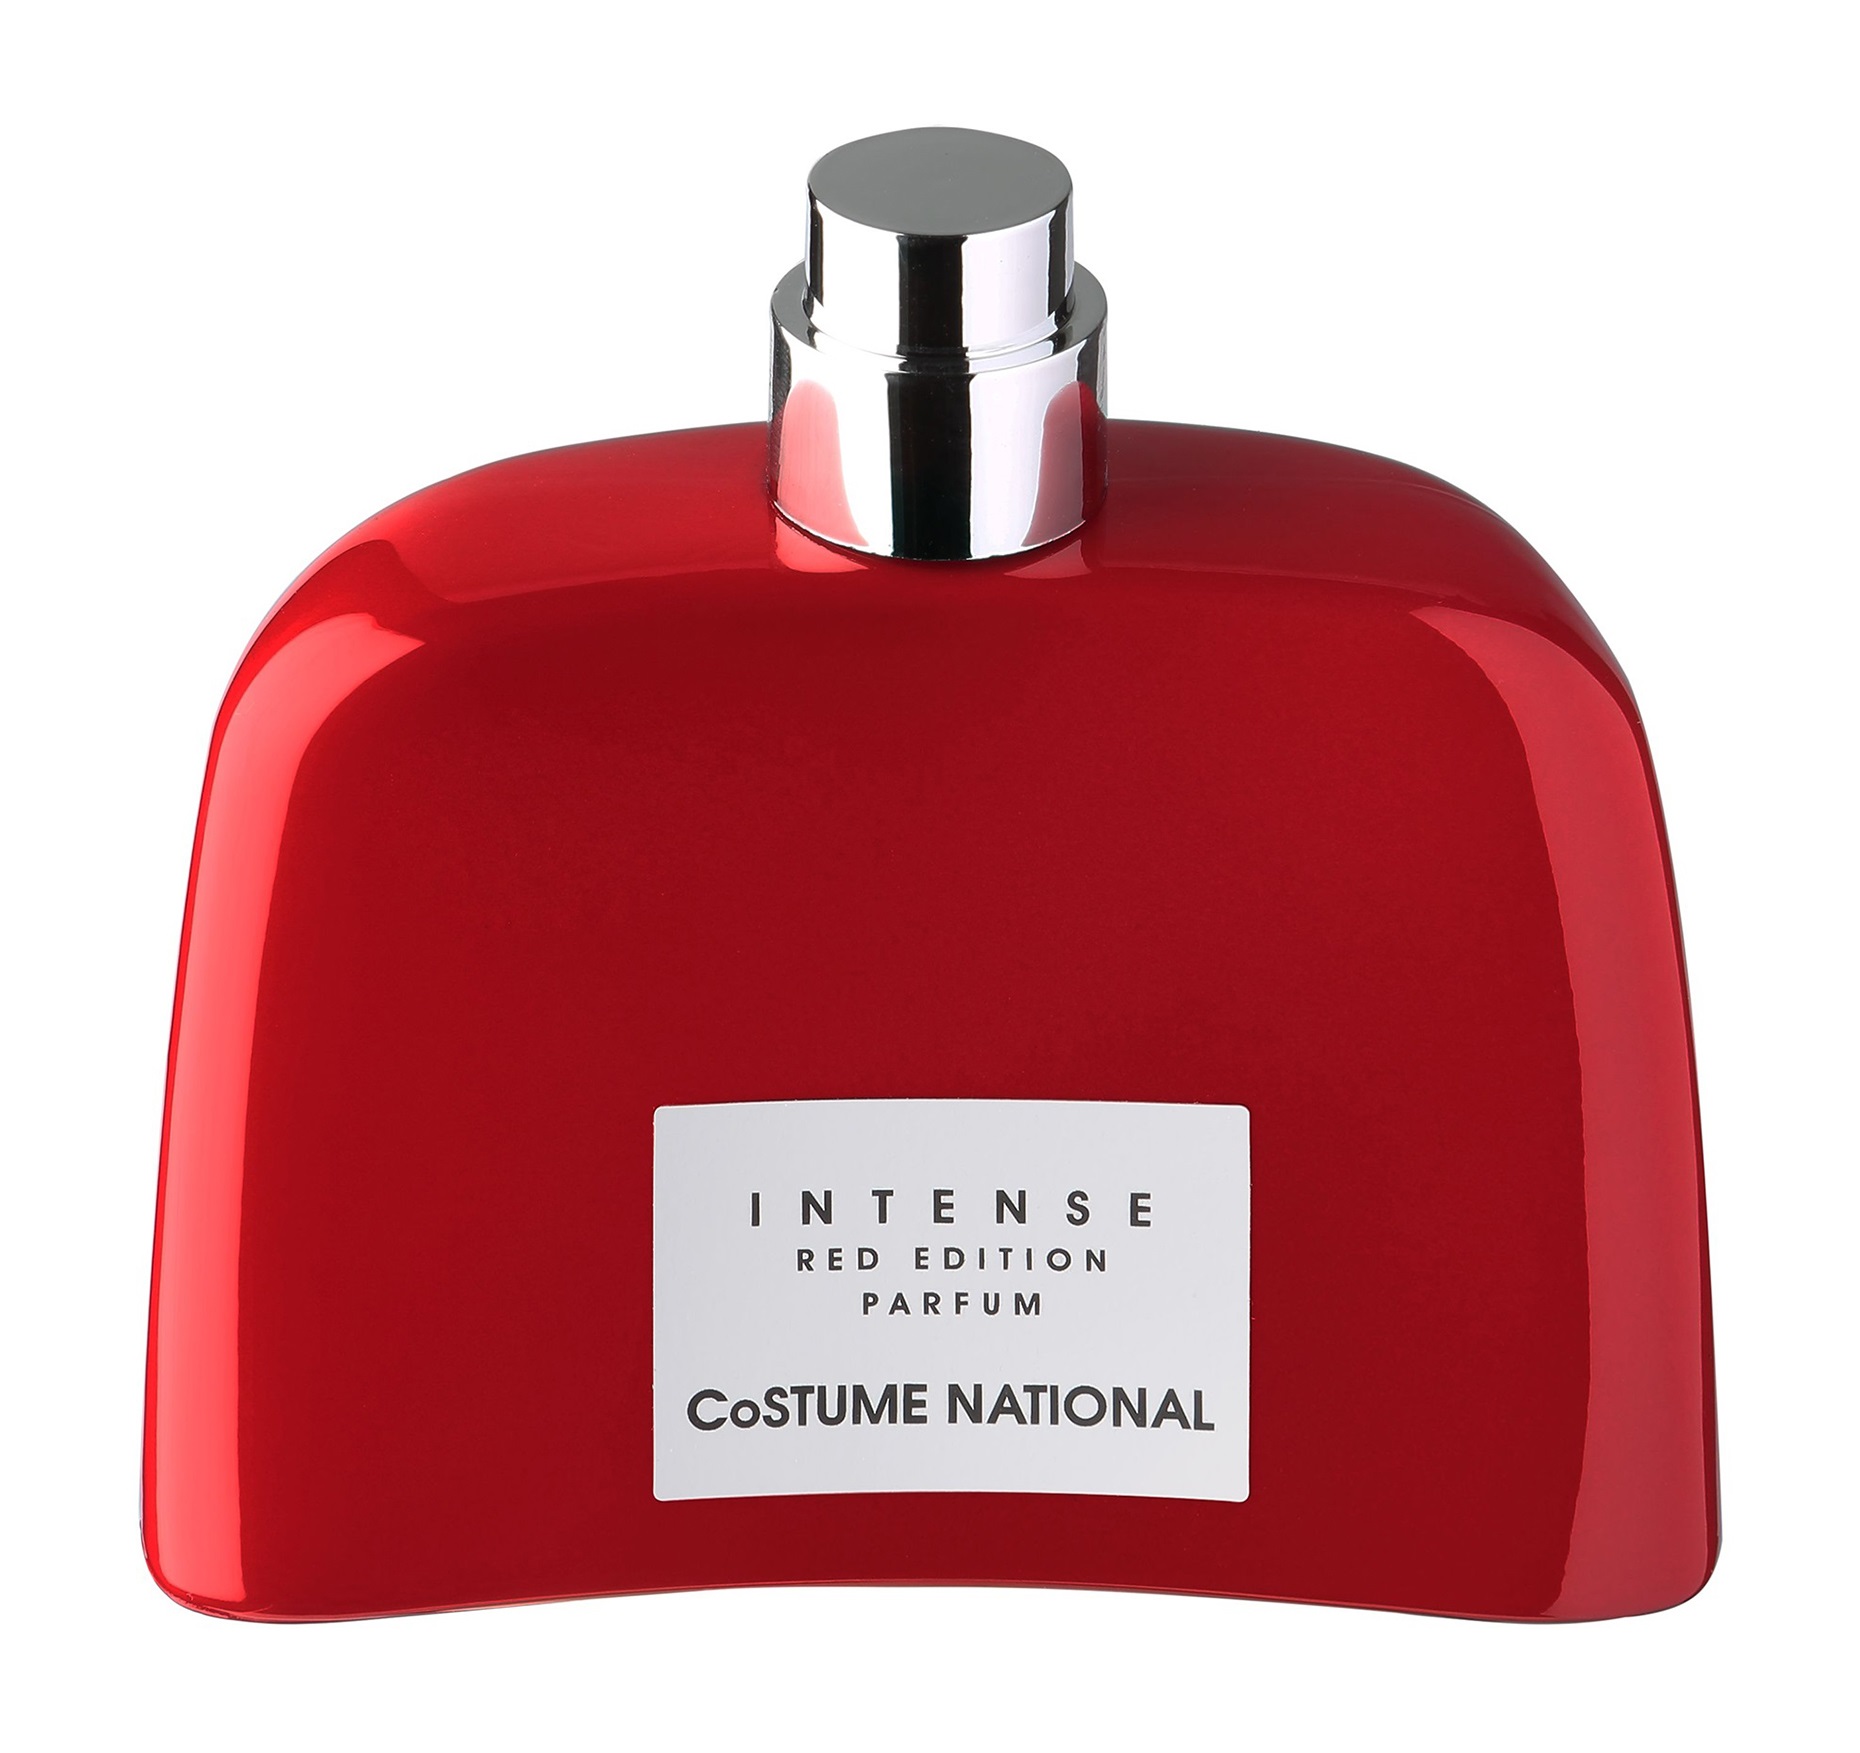 Парфюм Costume National Intense Red Edition Parfum все о красном вине